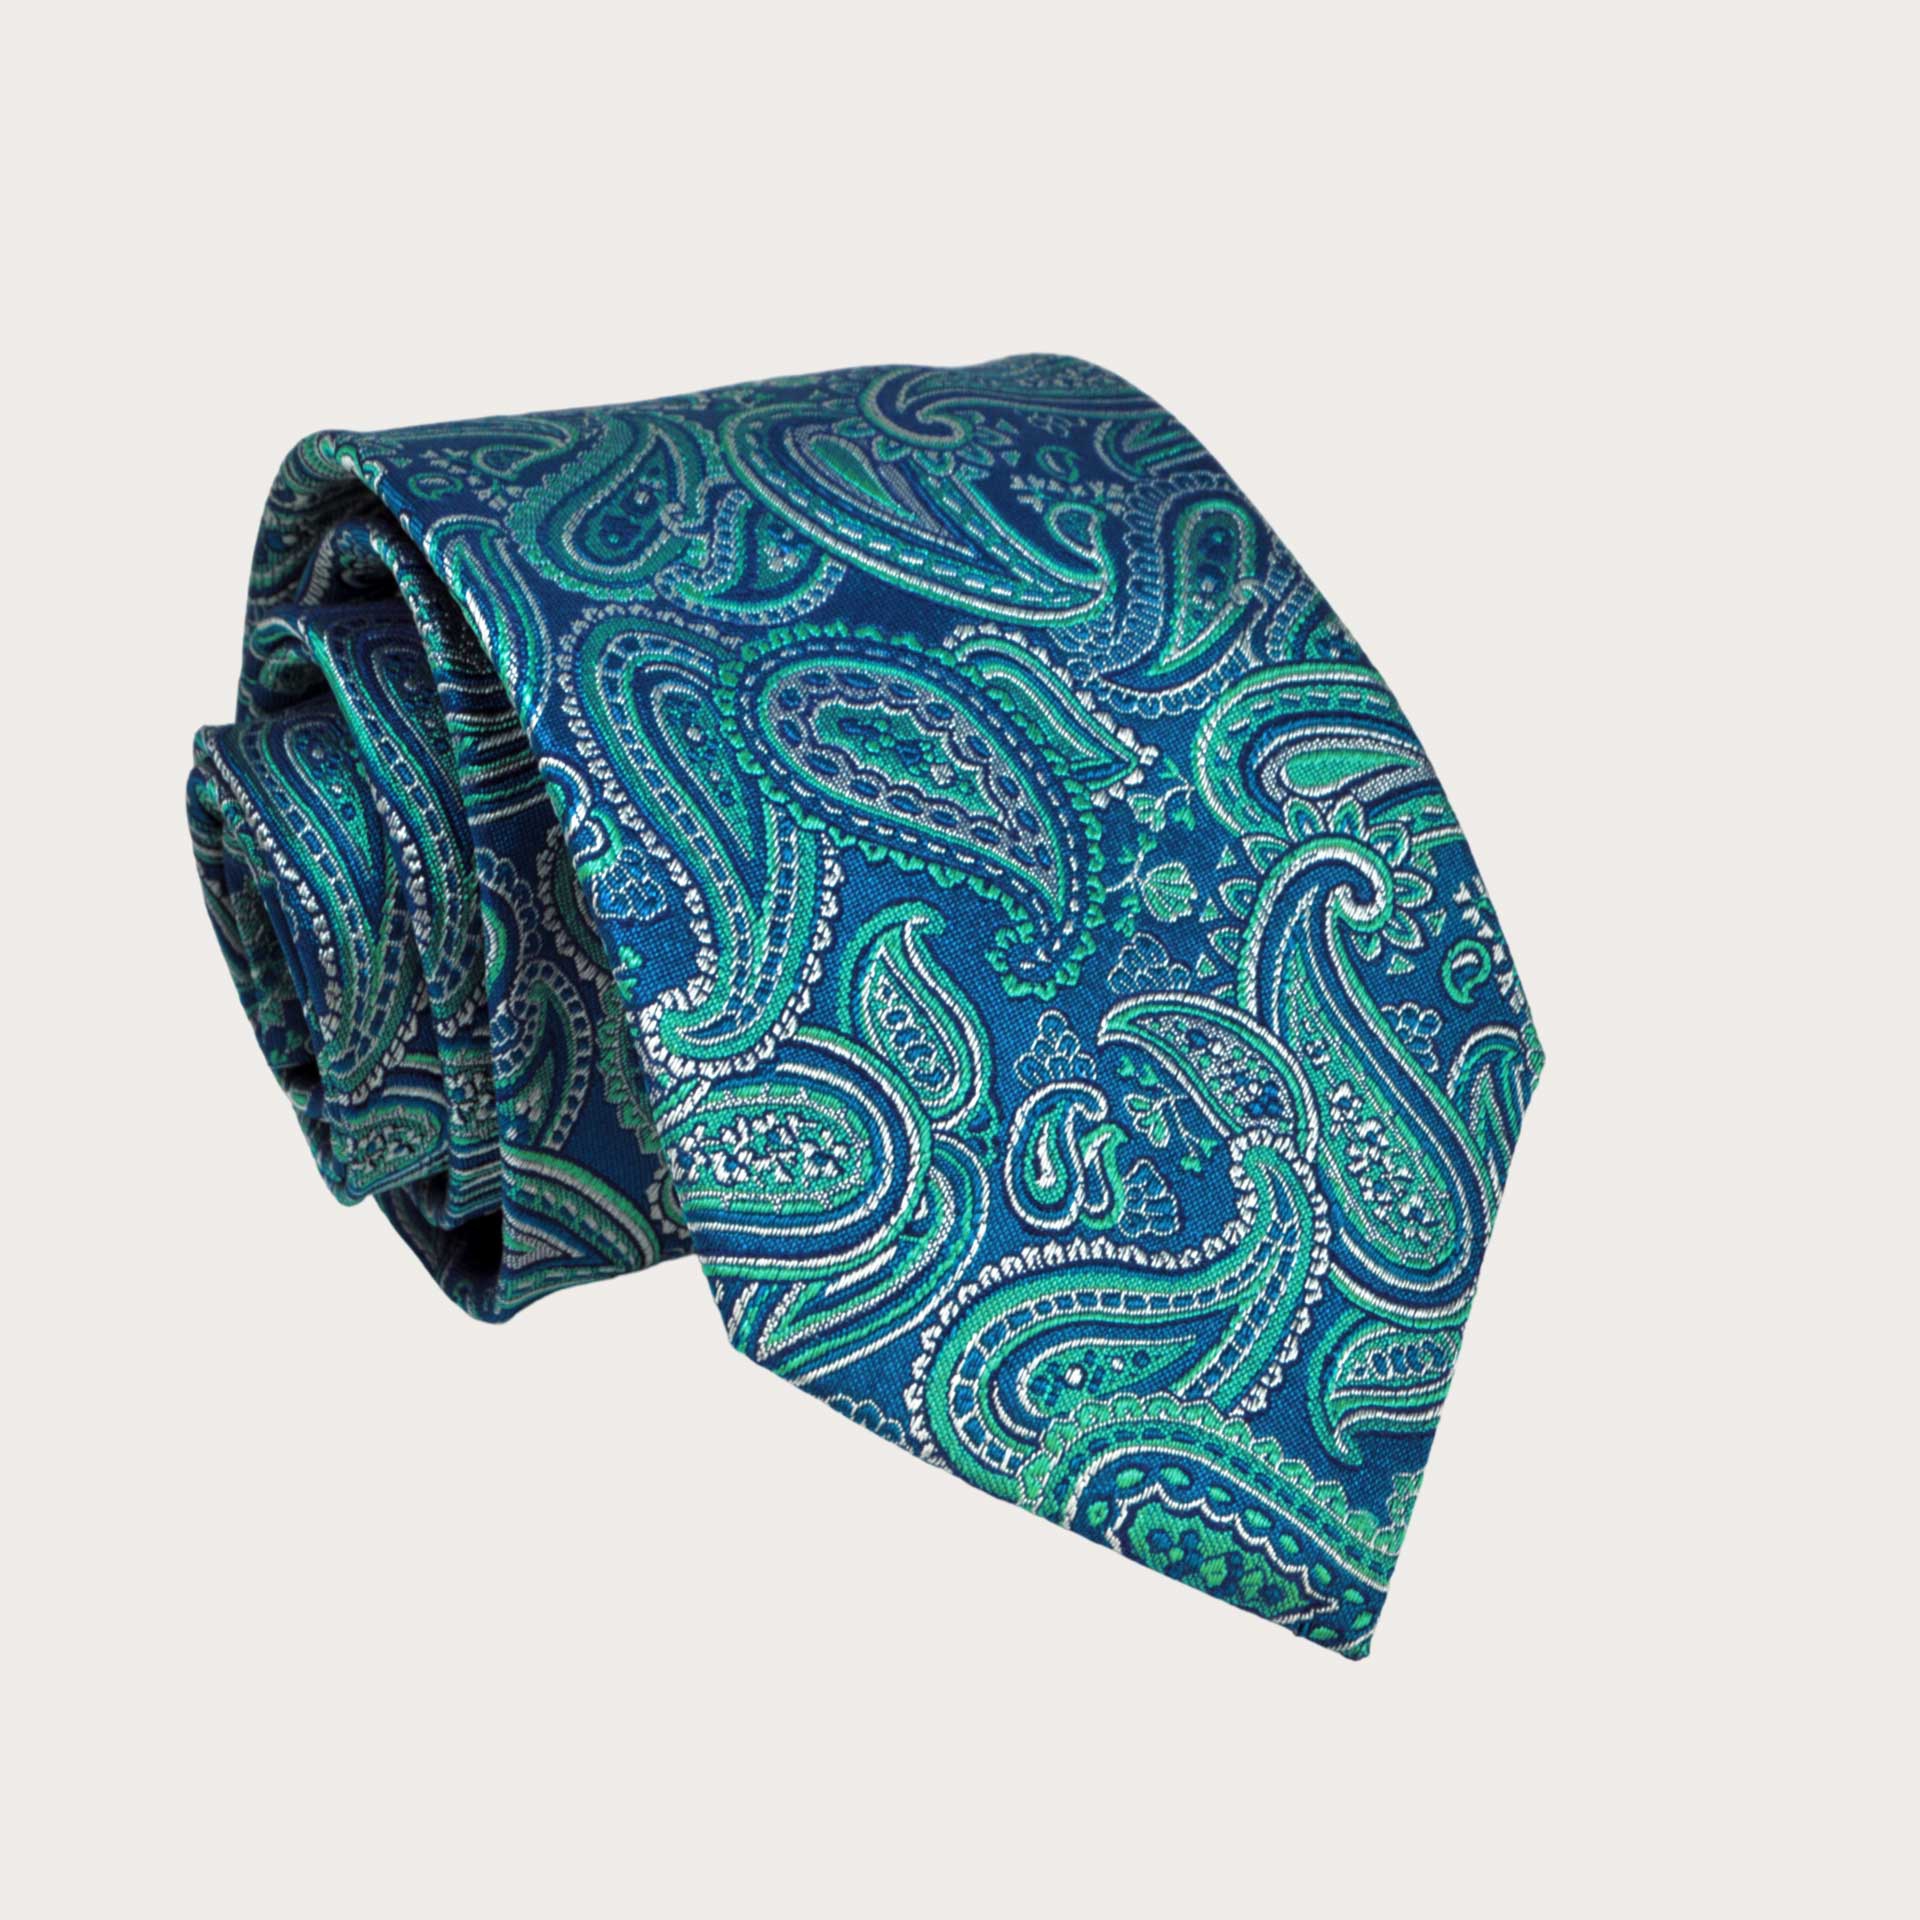 BRUCLE Cravatta uomo paisley blu e verde in seta jacquard